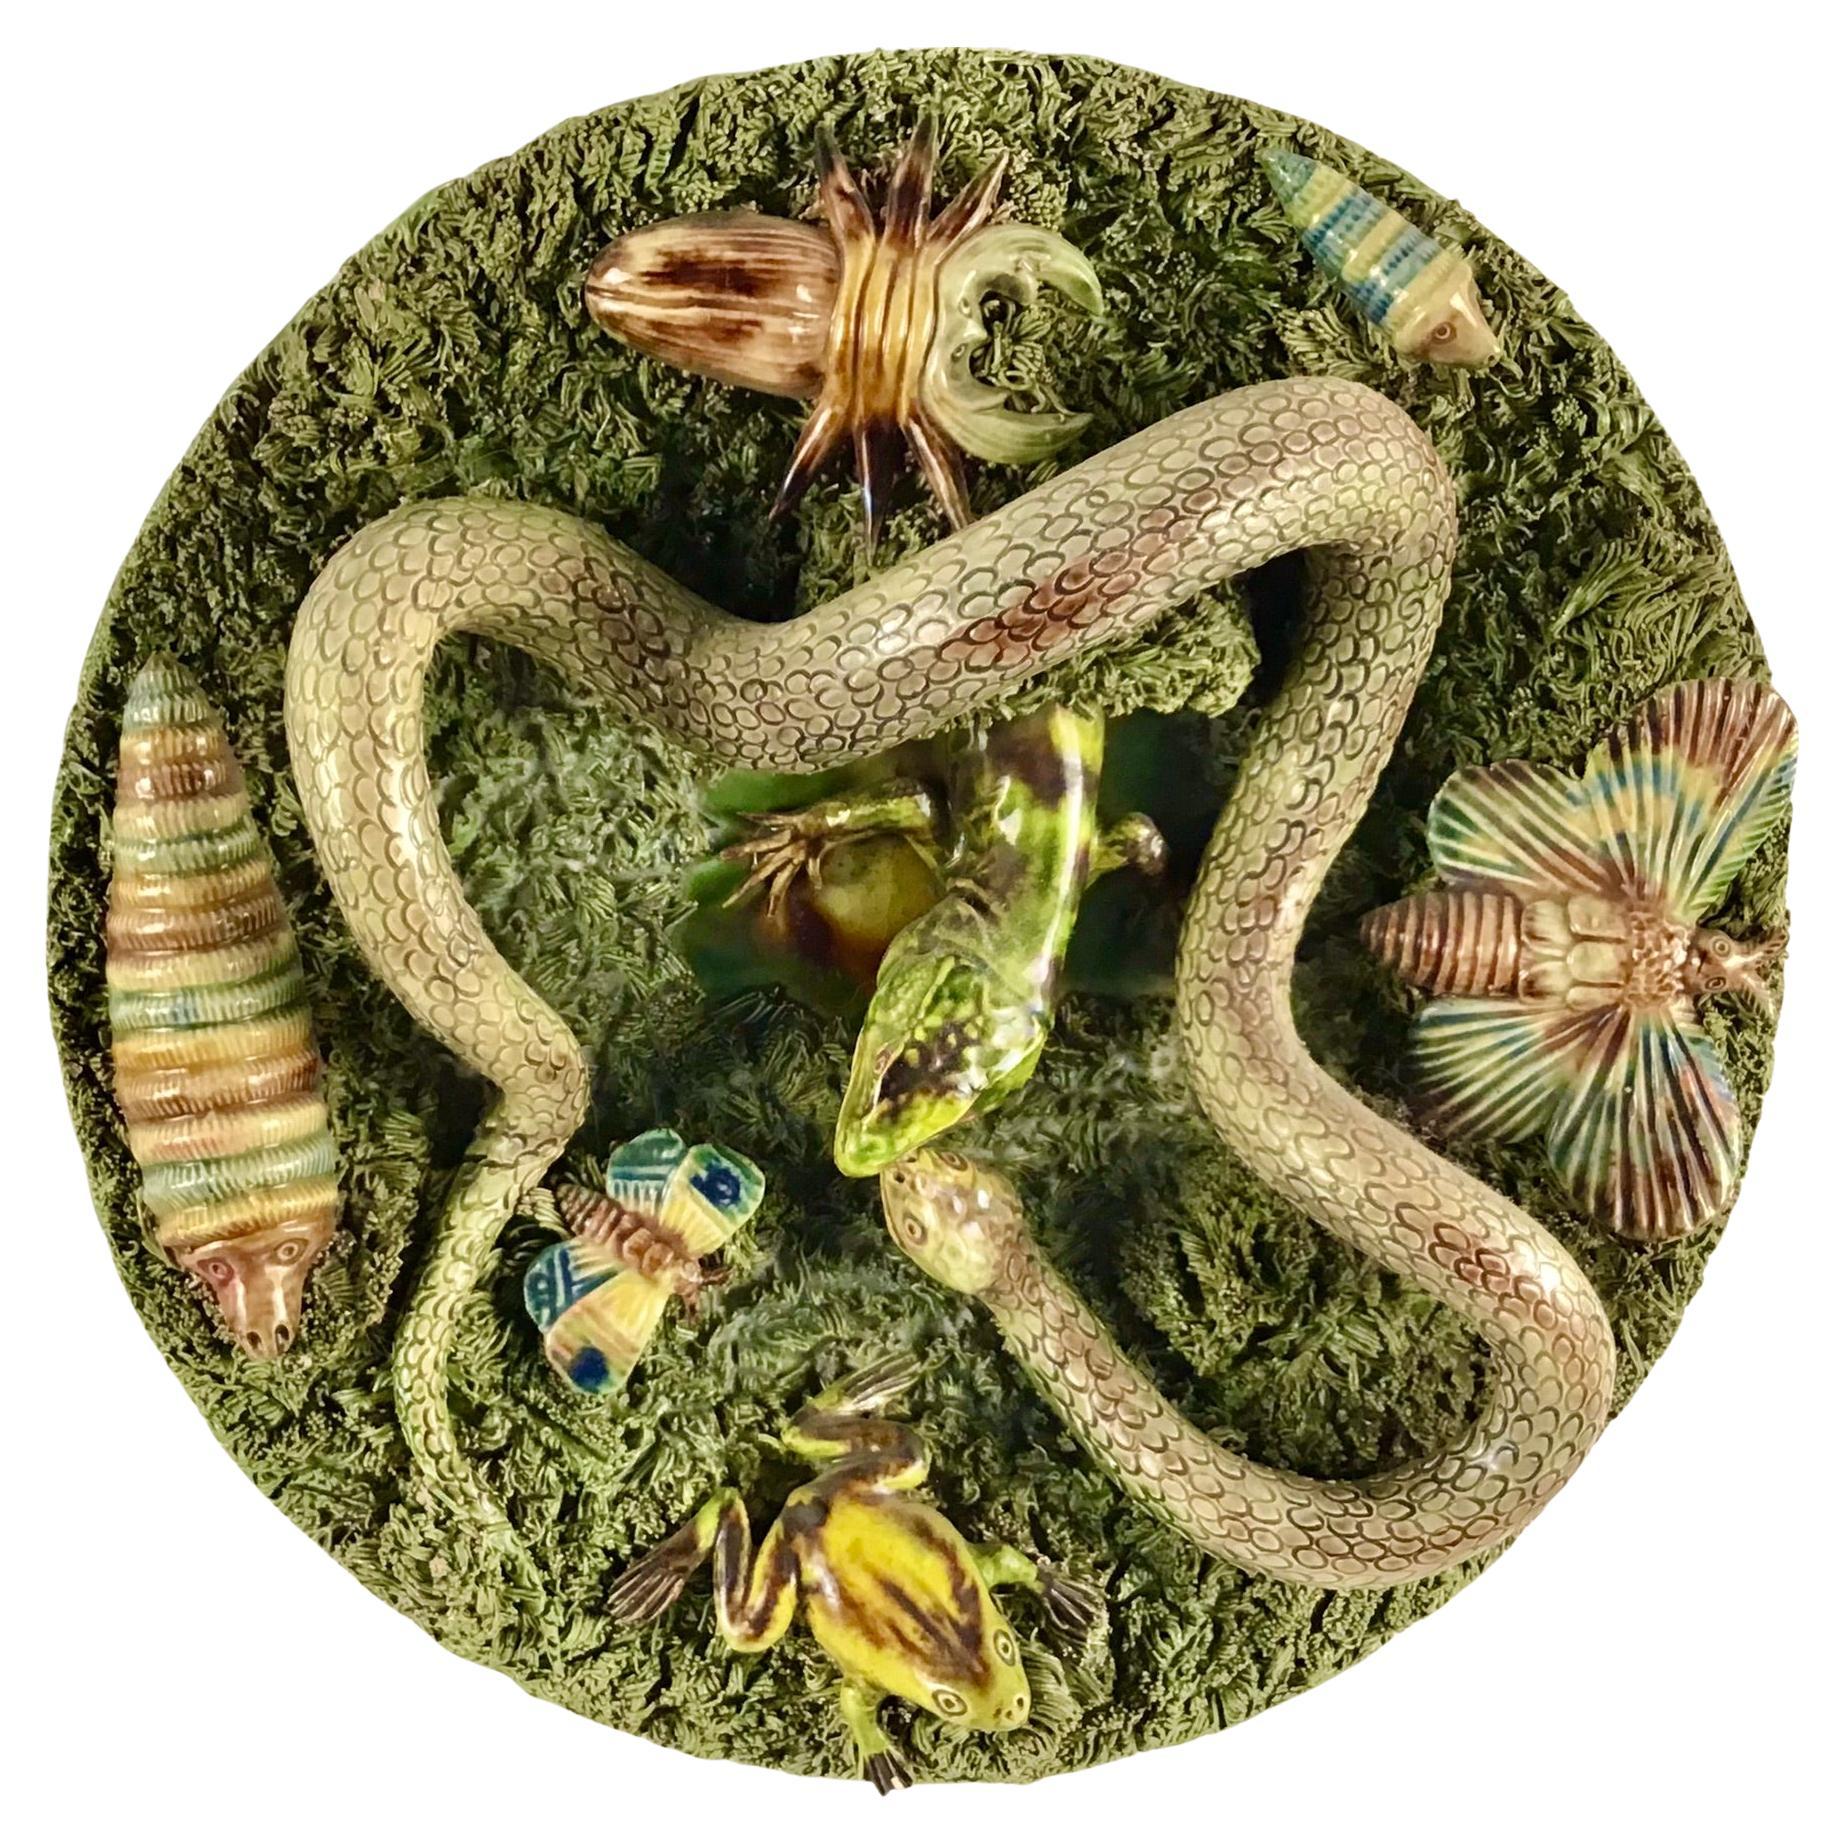 19th Majolica Palissy Snake and Lizard Wall Platter Jose Alves Cunha